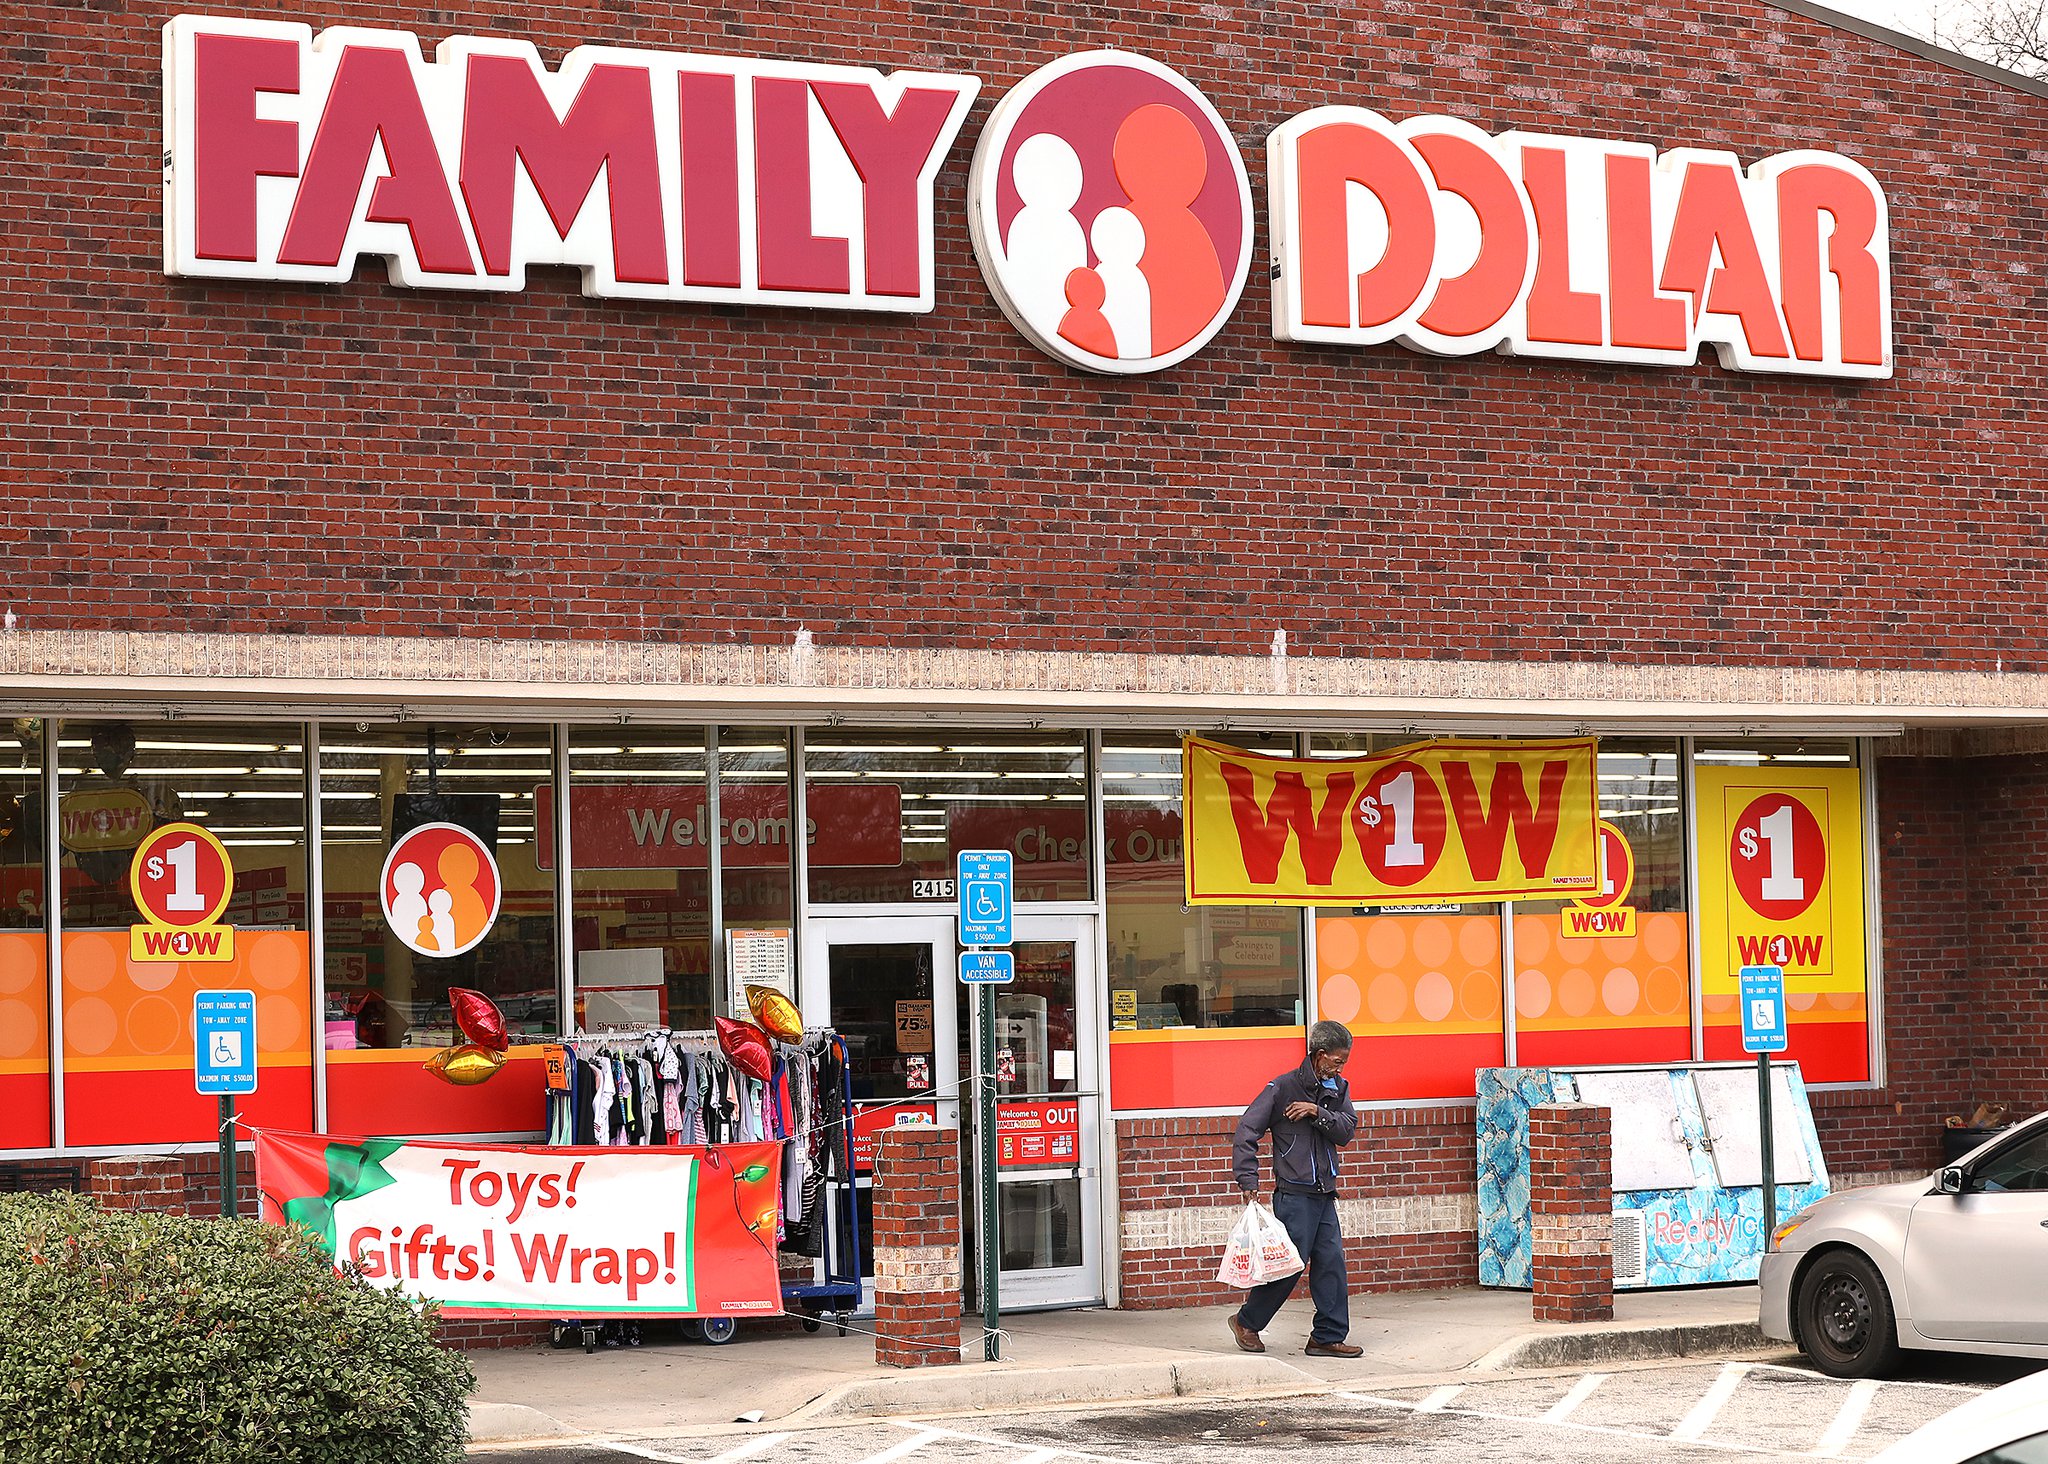 DeKalb County extends dollar store moratorium again